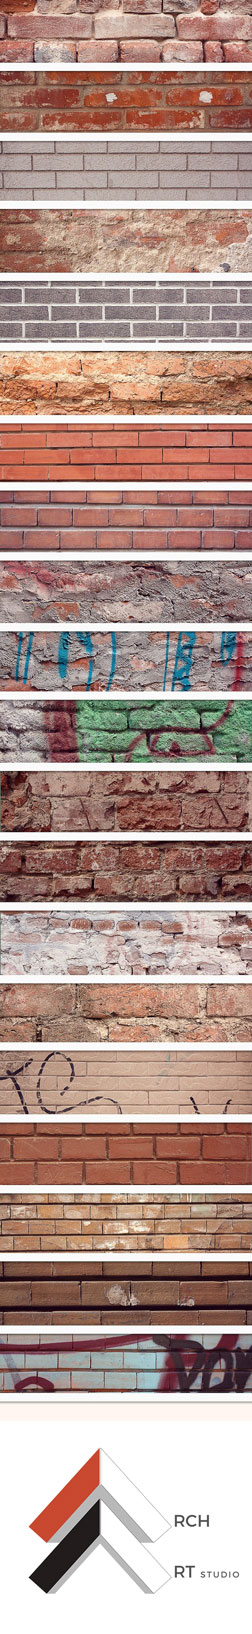 1552808168 designtnt brick wall textures set large